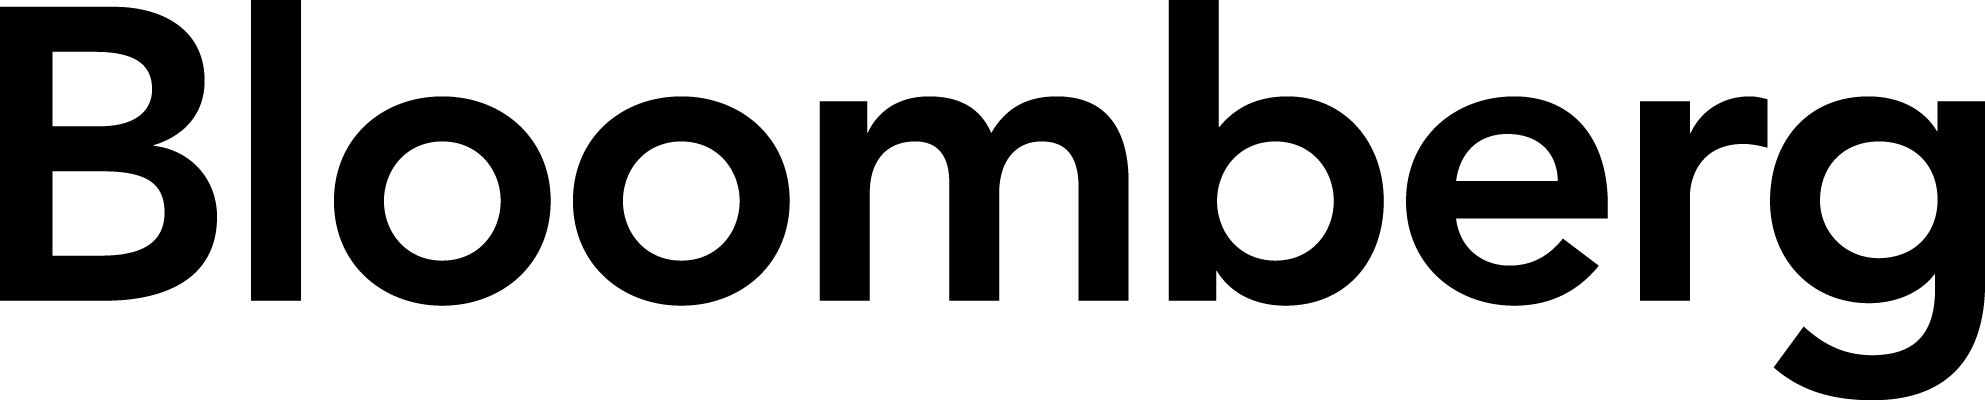 BLOOMBERG logo blk